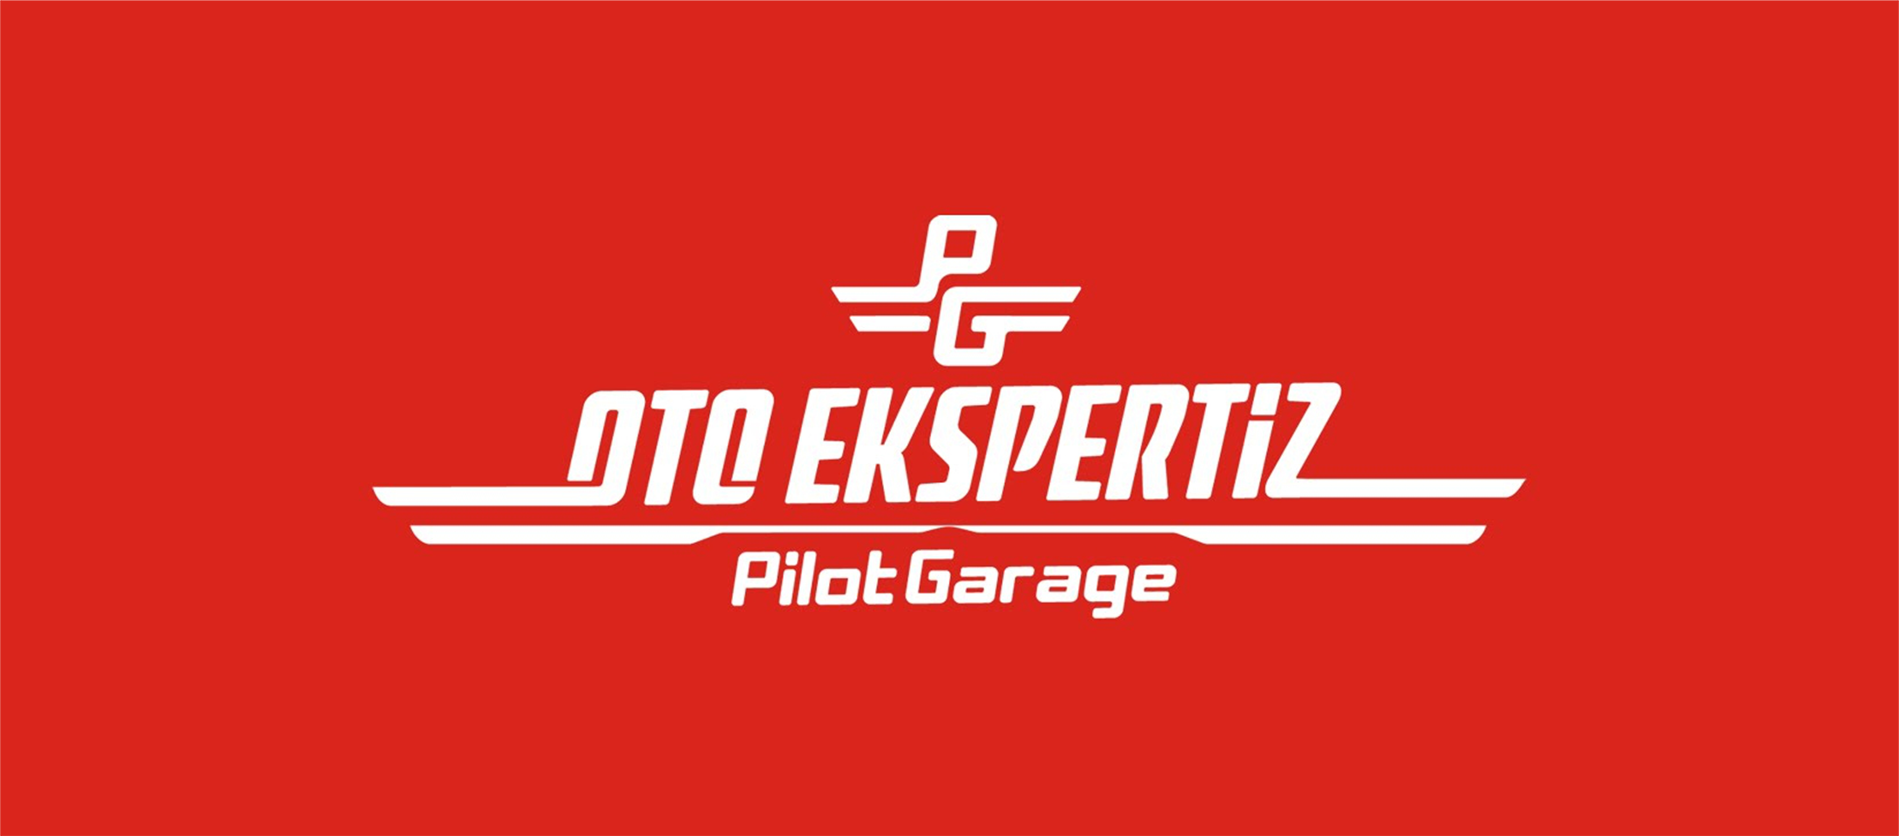 Pilot Garage 2